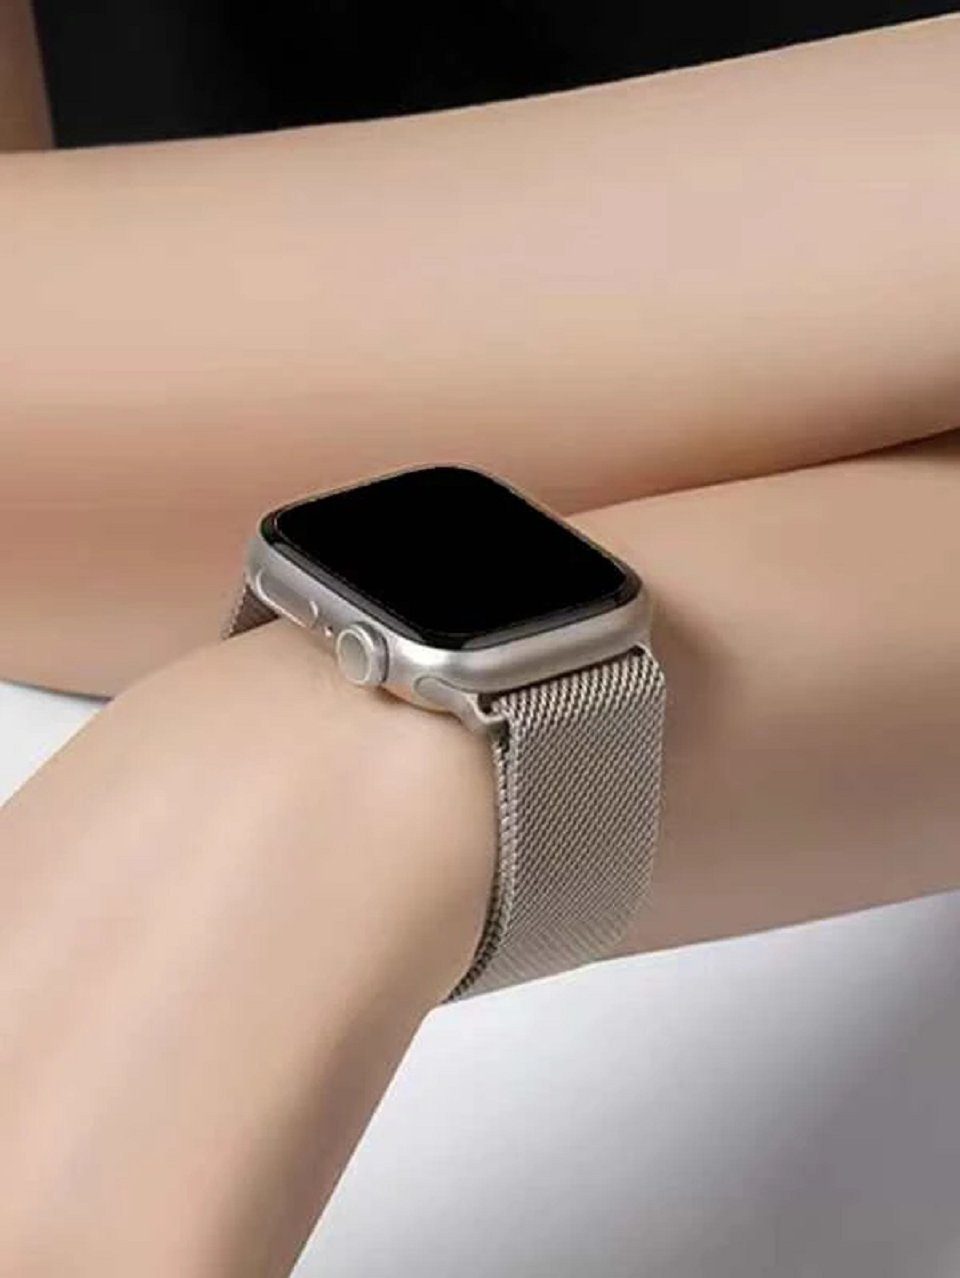 ENGELSINN Smartwatch-Armband für Apple Watch Metallarmband Edelstahl magnetisch Mesh Beige, Bestseller